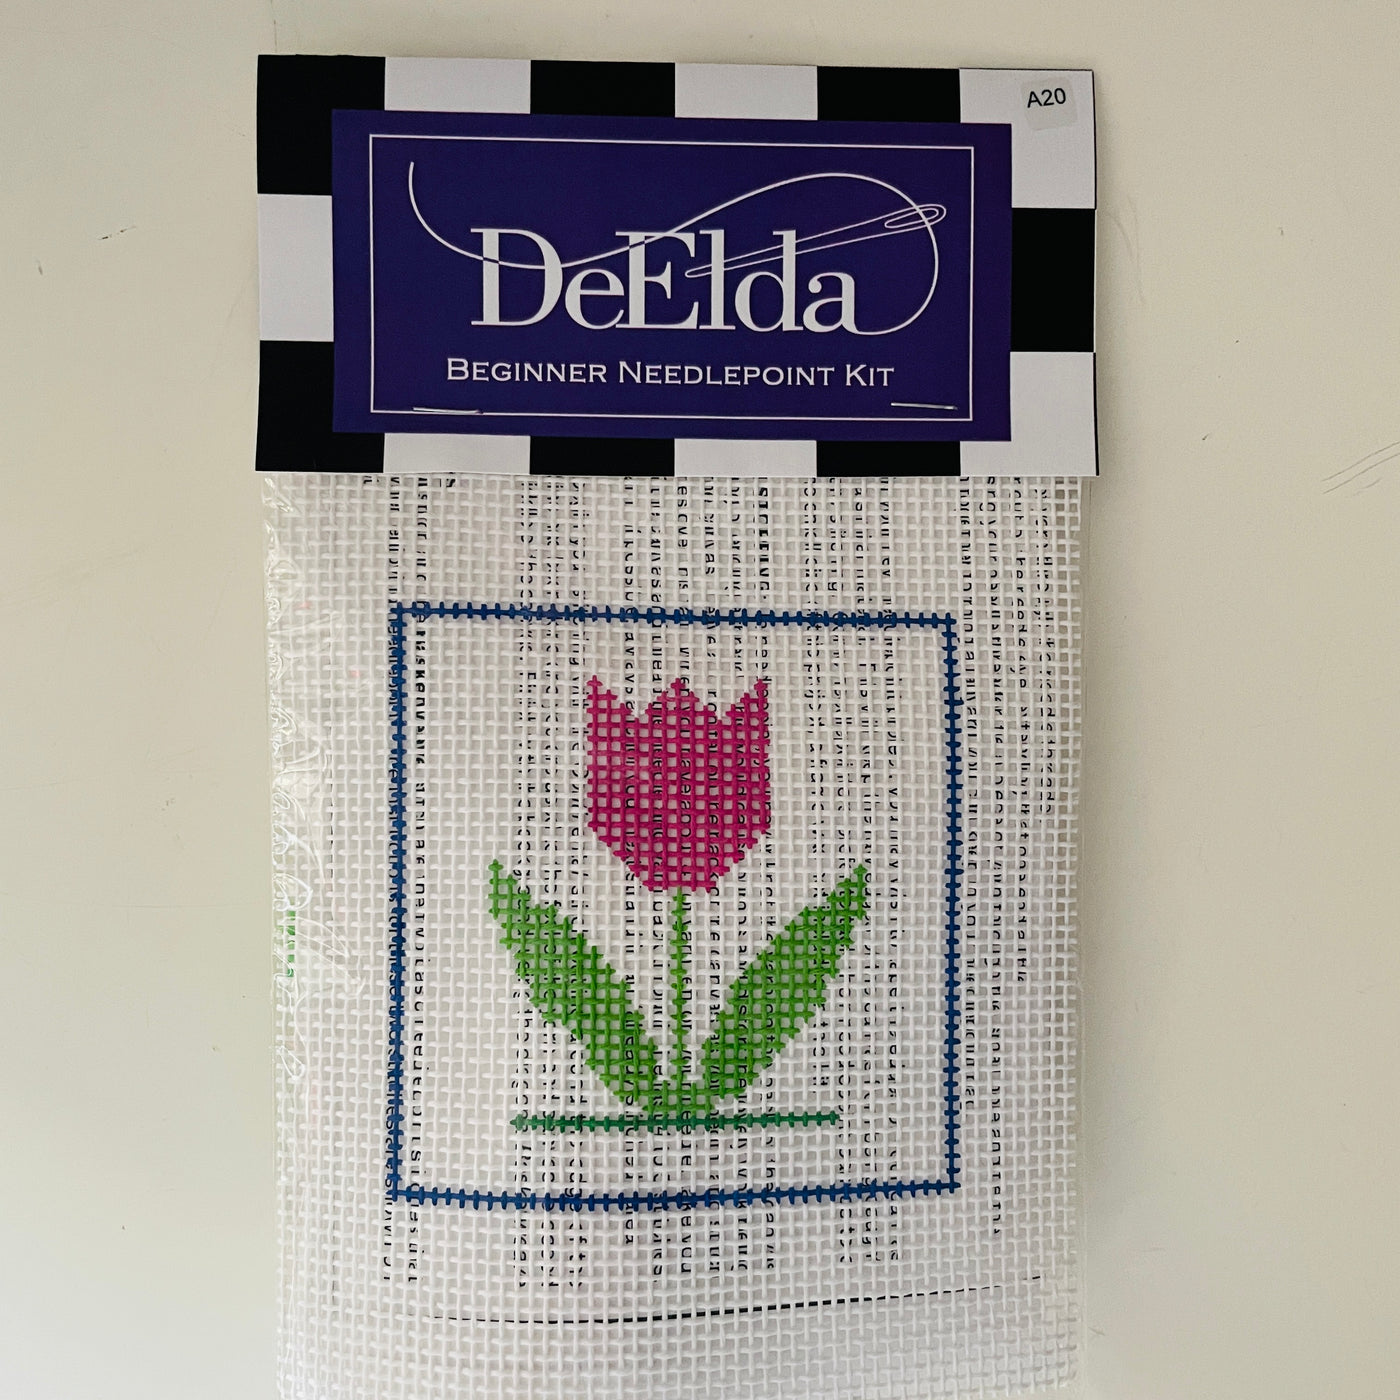 DeElda Tulip Kit (includes fiber)